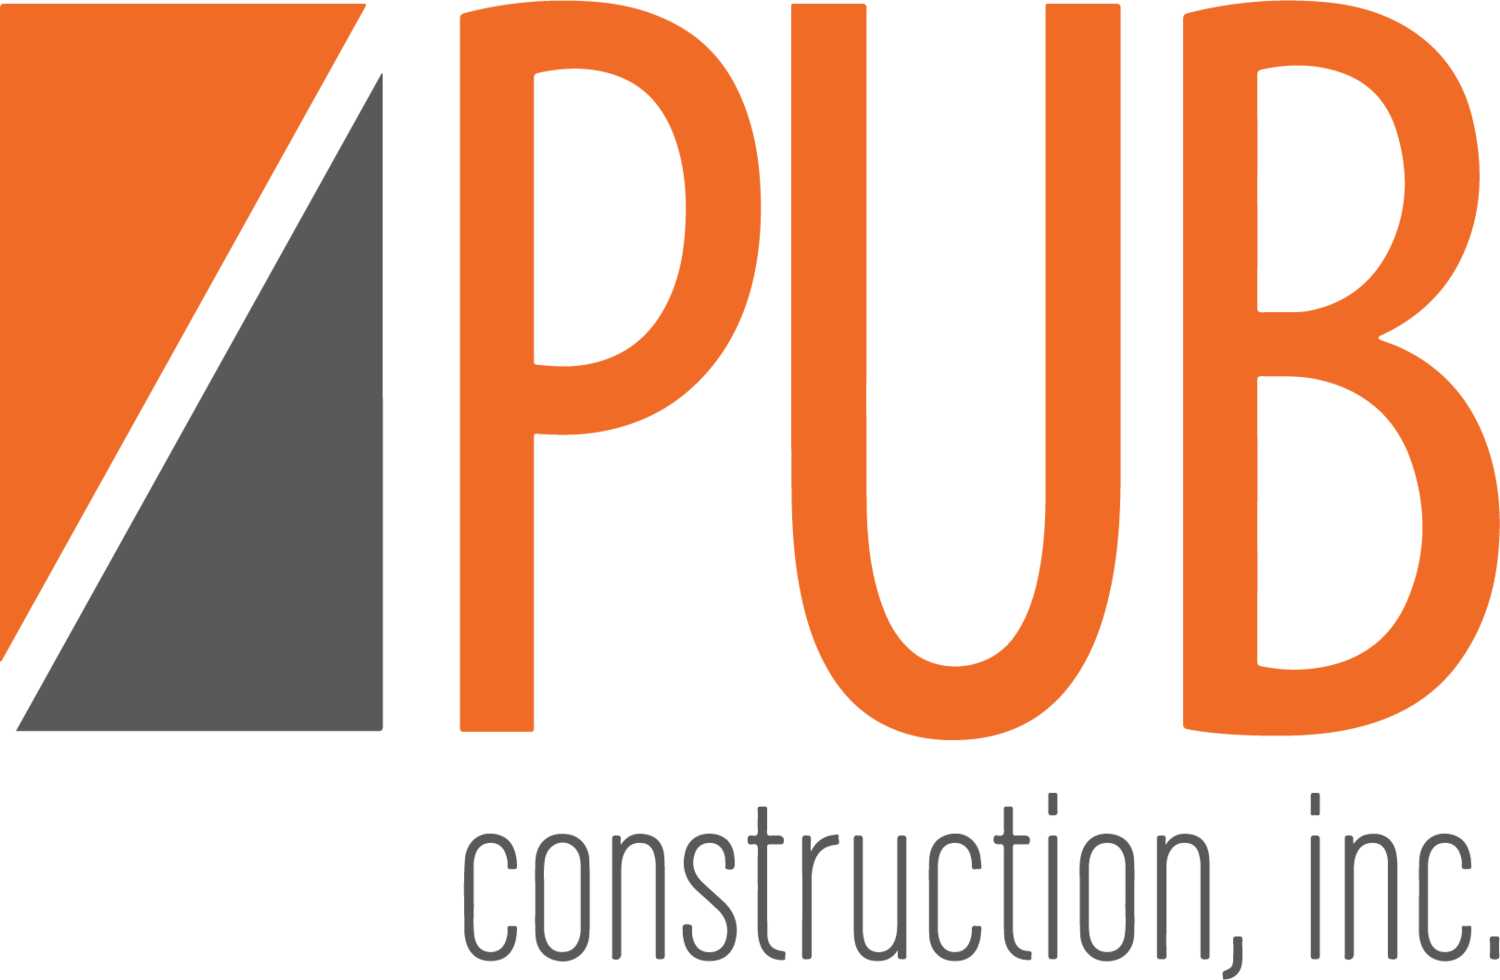 PUB Construction, Inc